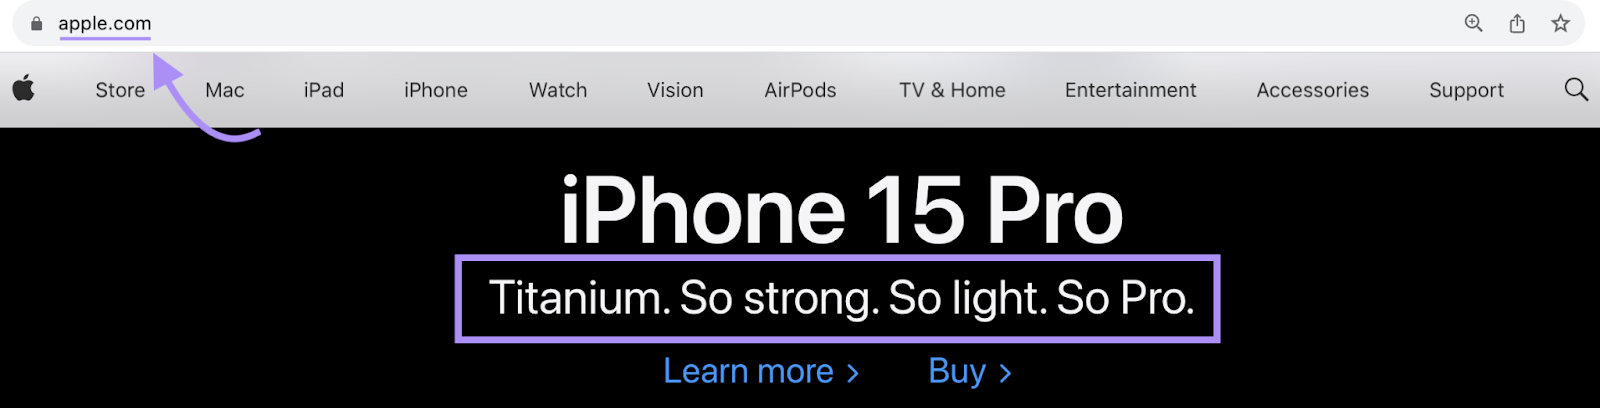 "iPhone 15 Pro. Titanium. So strong. So light. So Pro" headline on "apple.com"